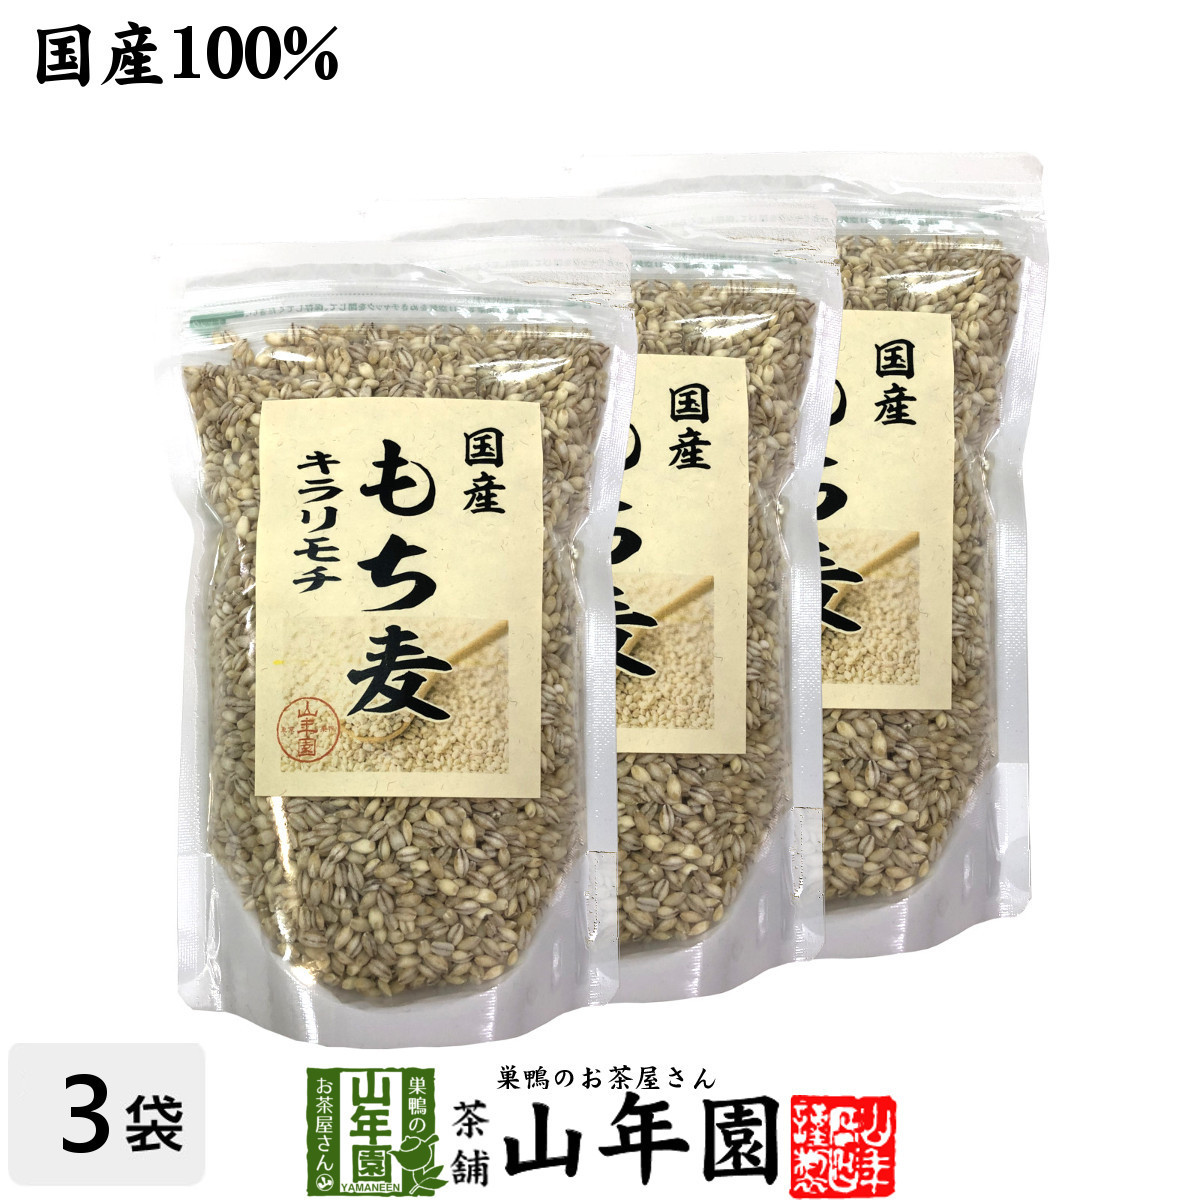  domestic production mochi mugi kila Limo chi500g×3 sack set free shipping 